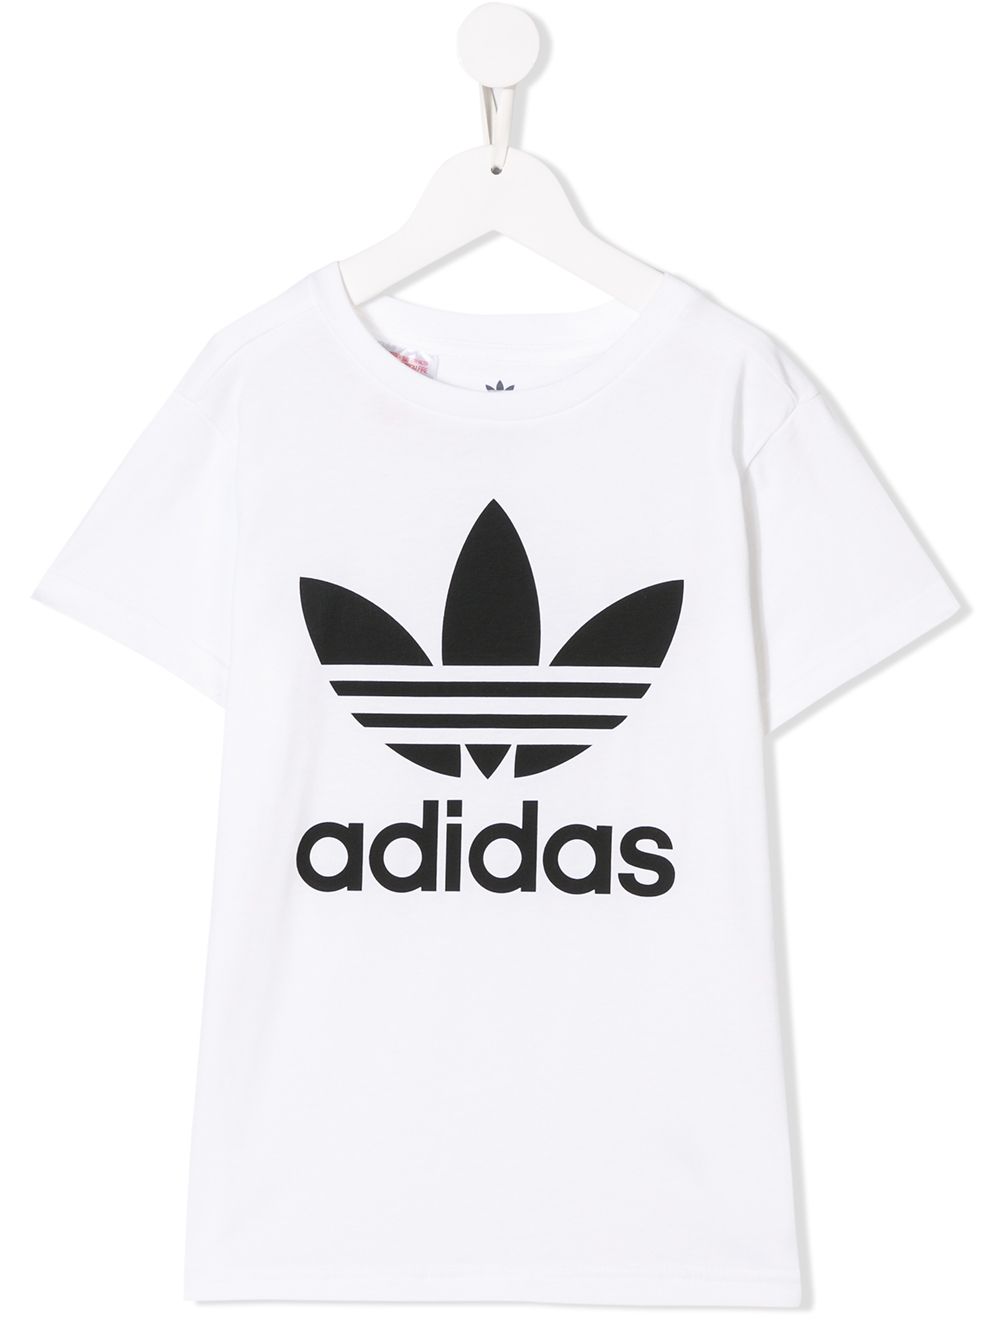 фото Adidas kids футболка с логотипом